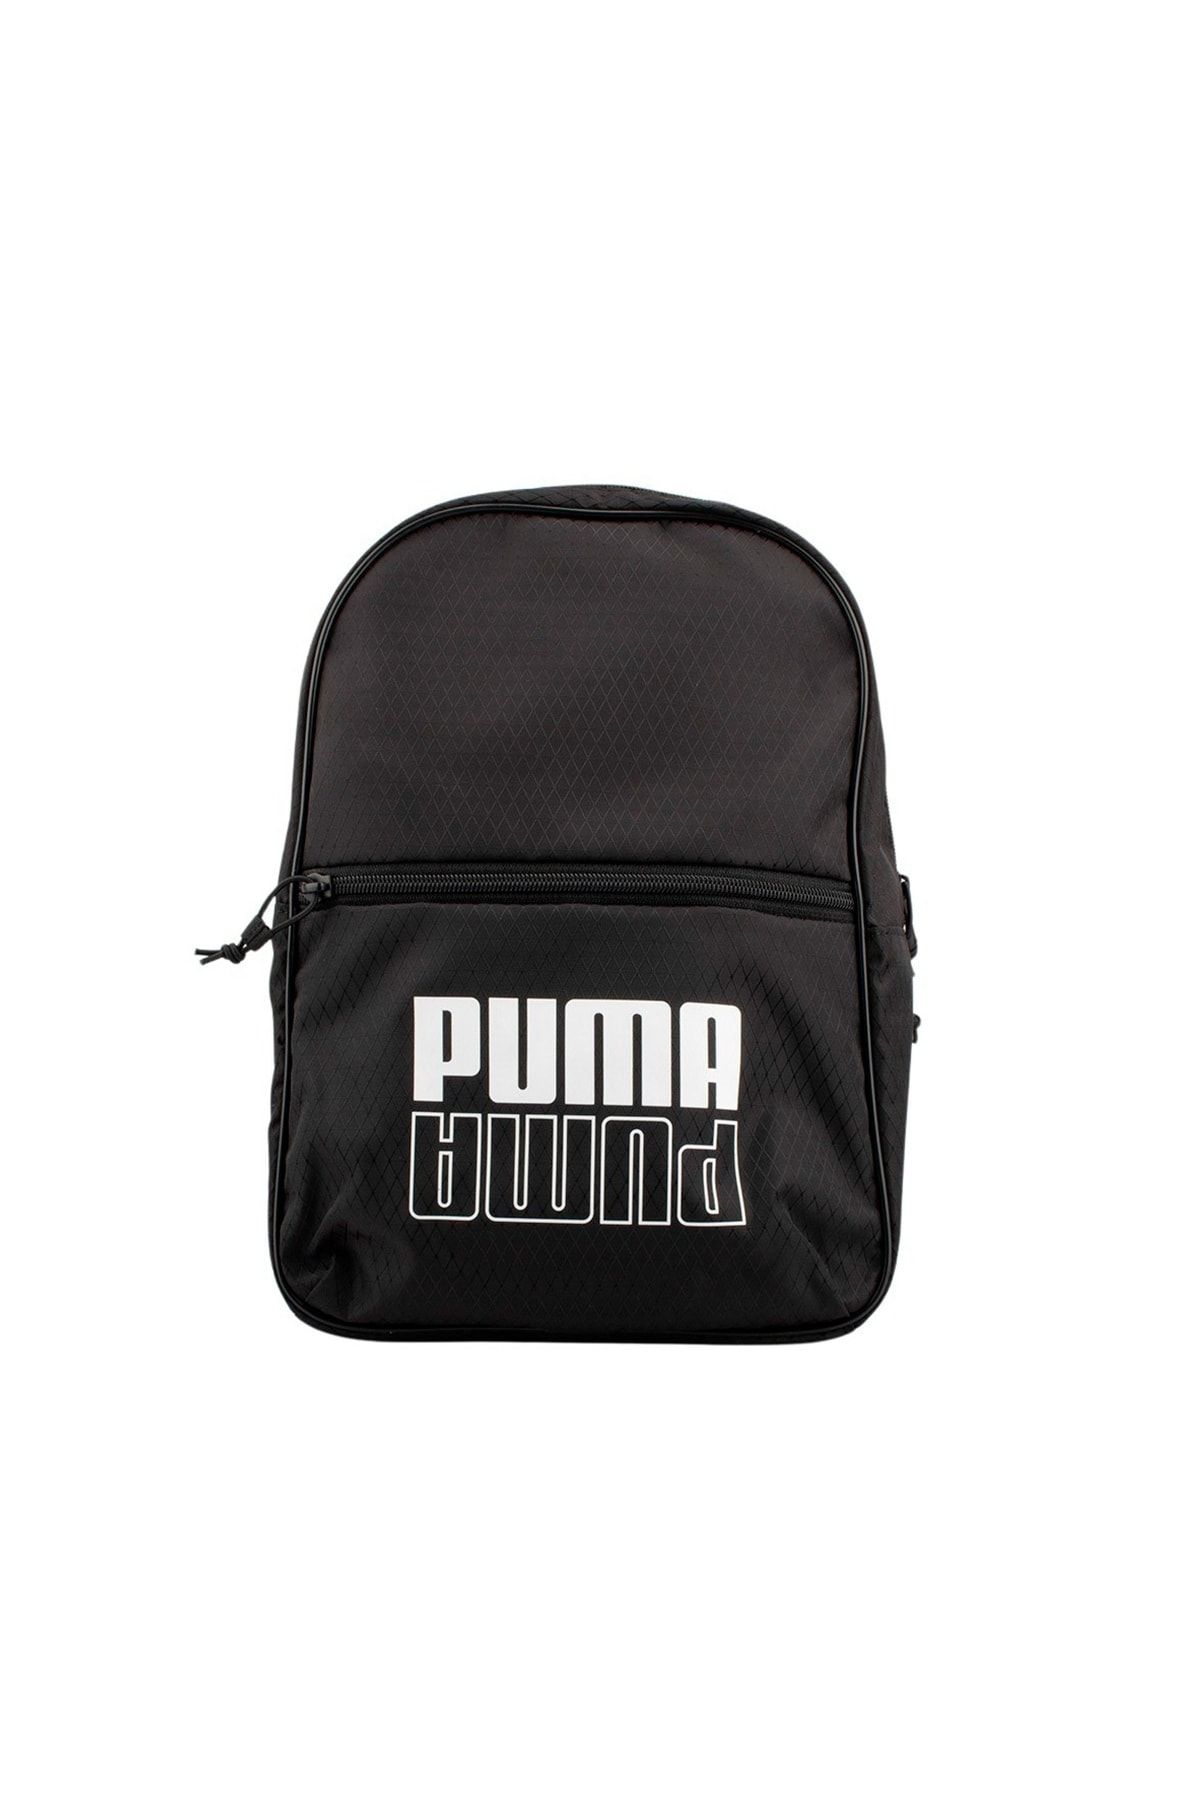 Puma کوله پشتی Mini Boy - پایه اصلی 078323-01 سیاه